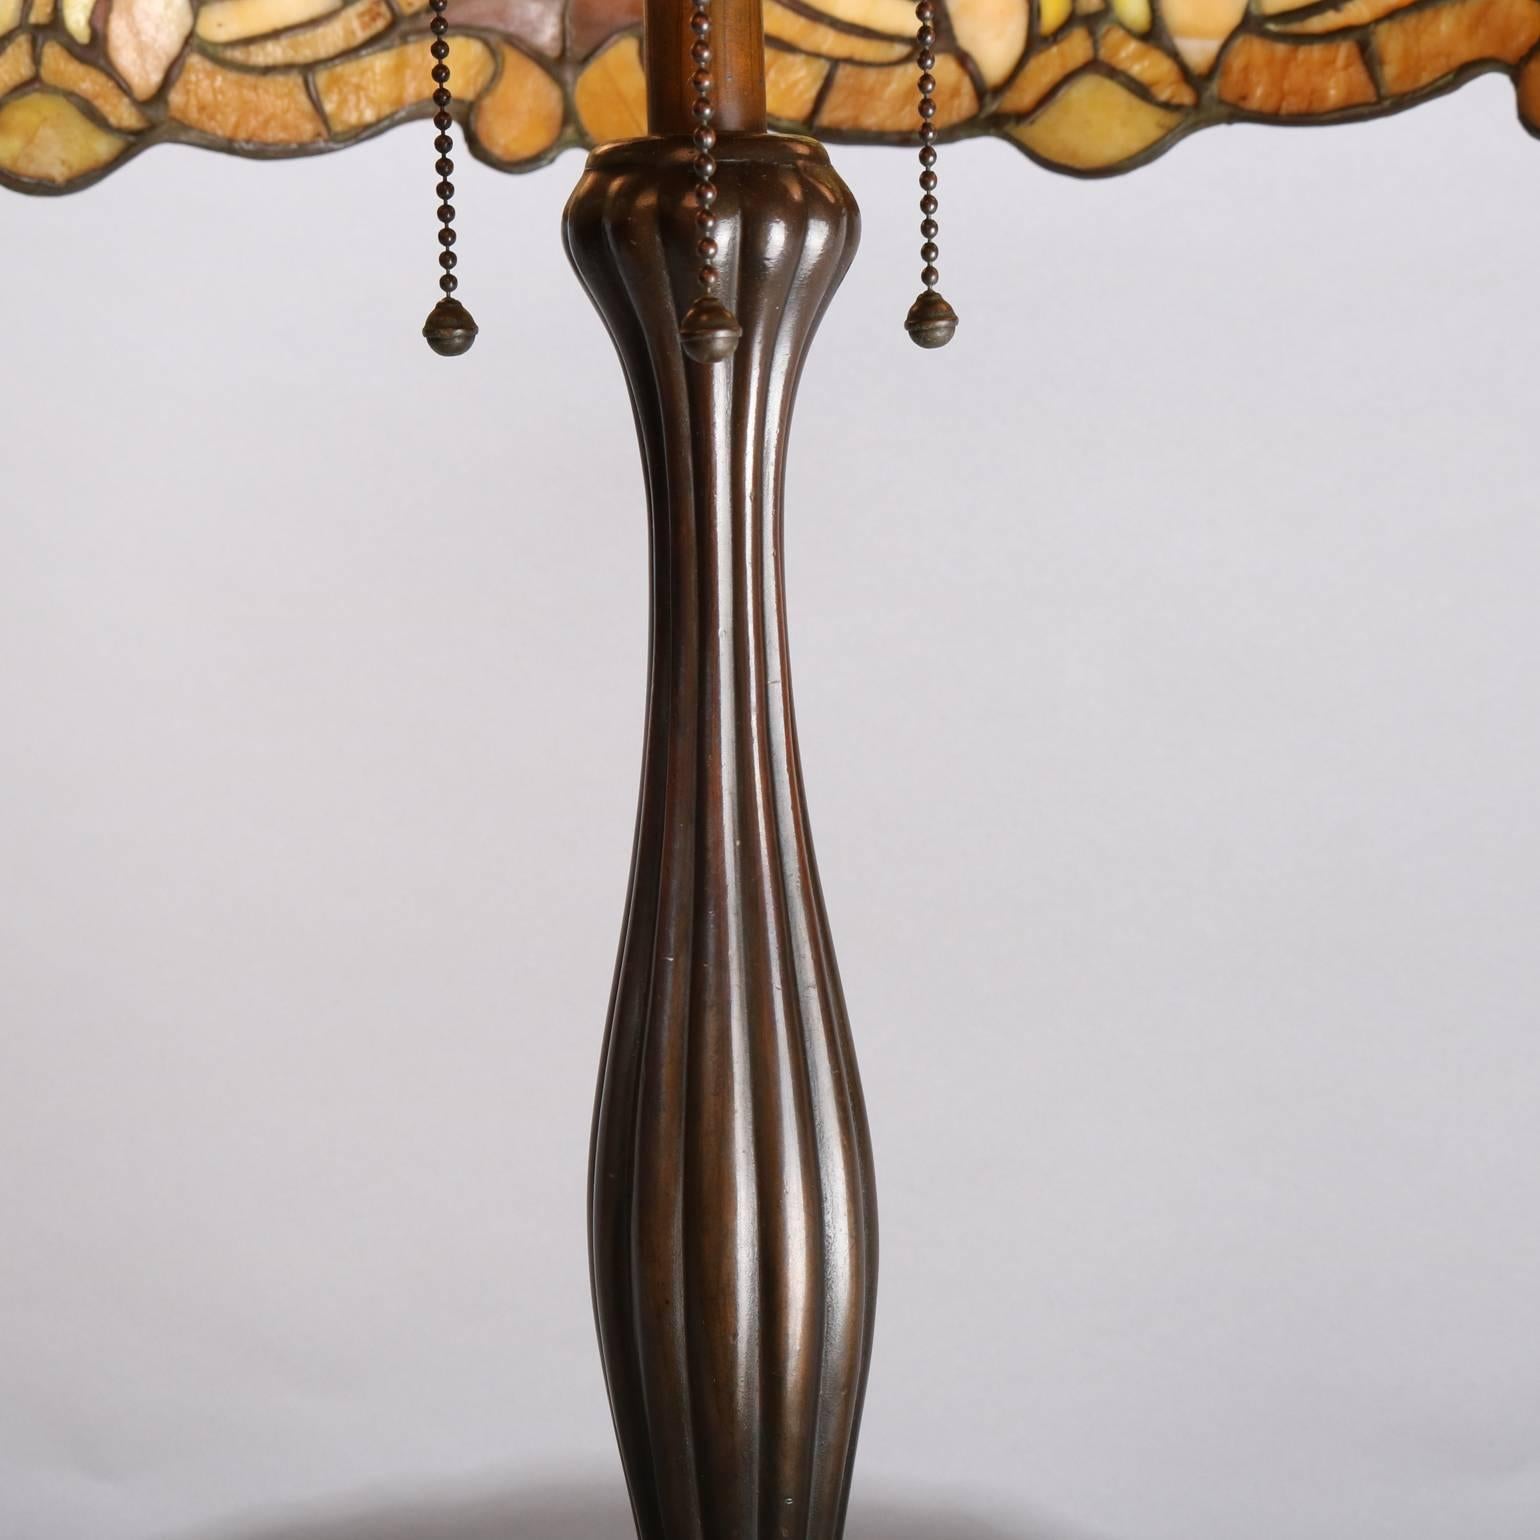 American Antique Duffner & Kimberly Co. Art Nouveau Mosiac Glass Lamp, Shell Motif